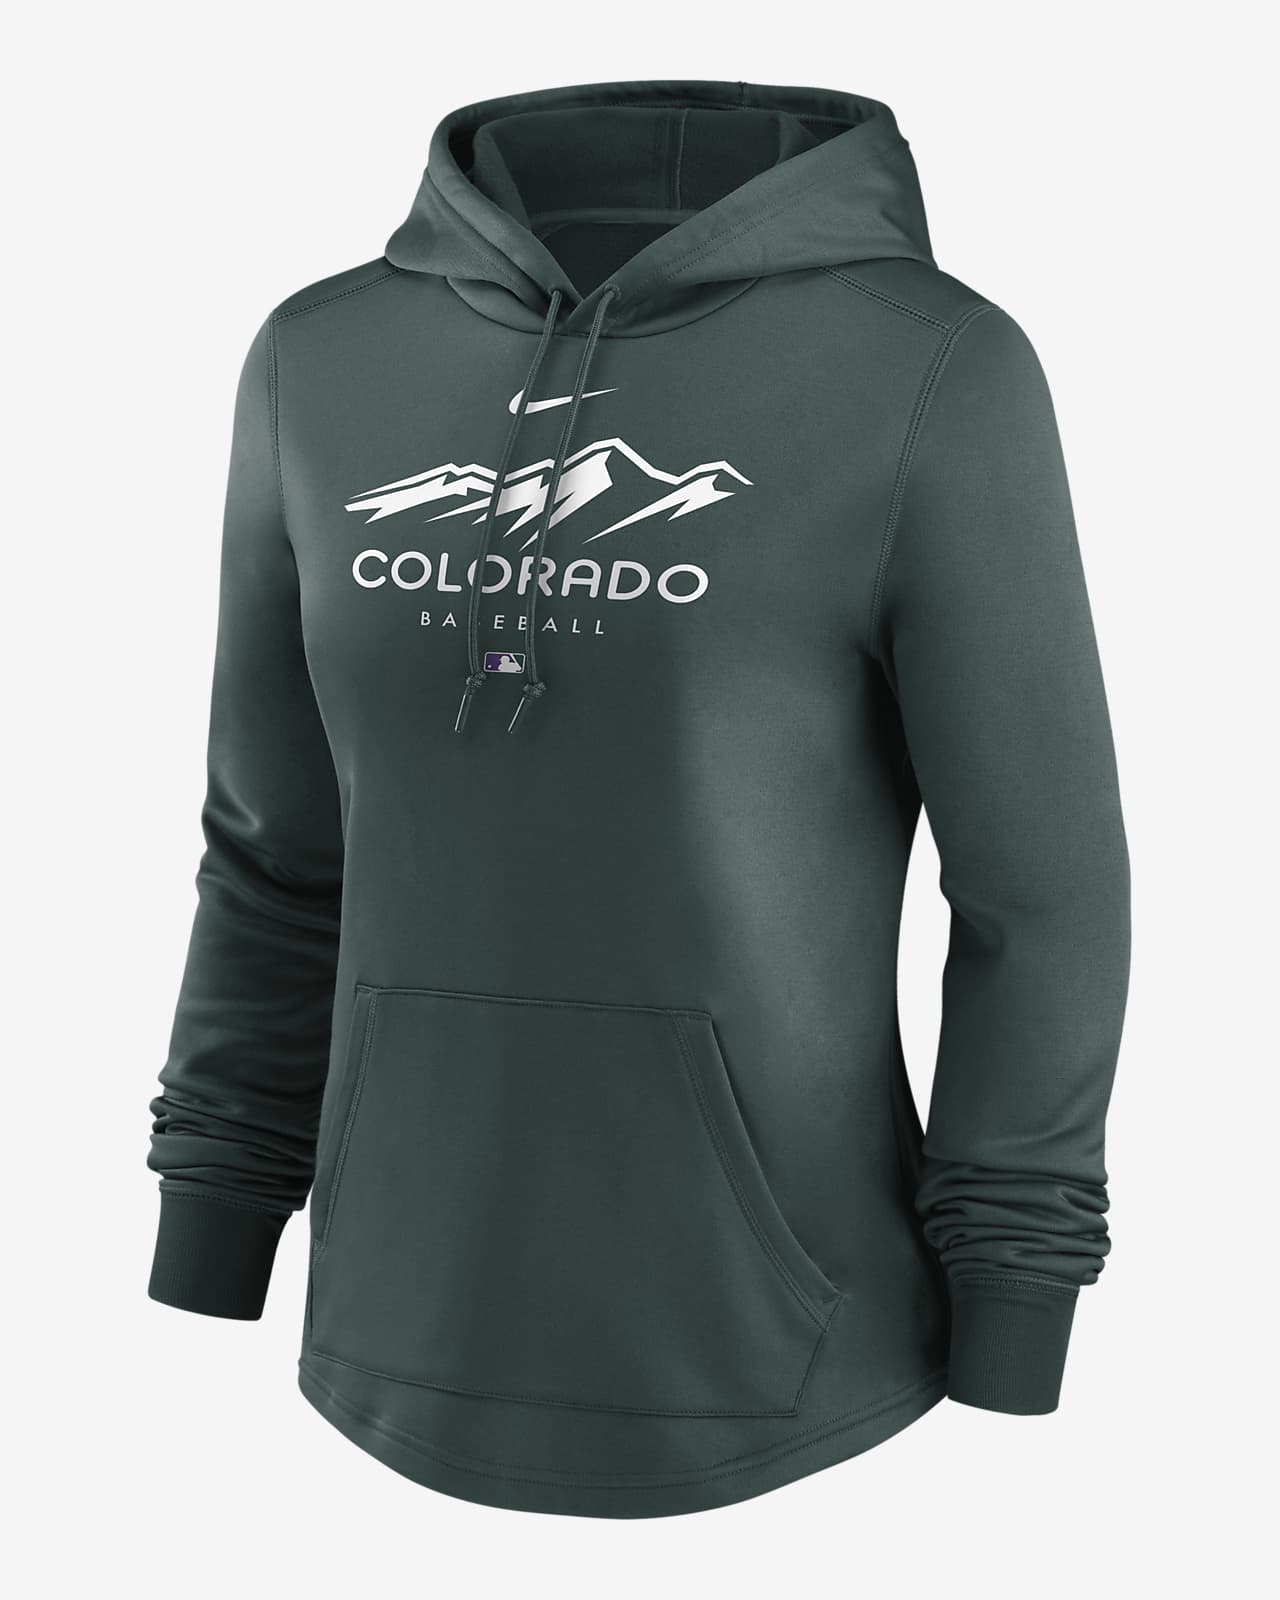 Nike City Connect (MLB Colorado Rockies) Women's T-Shirt. Nike.com